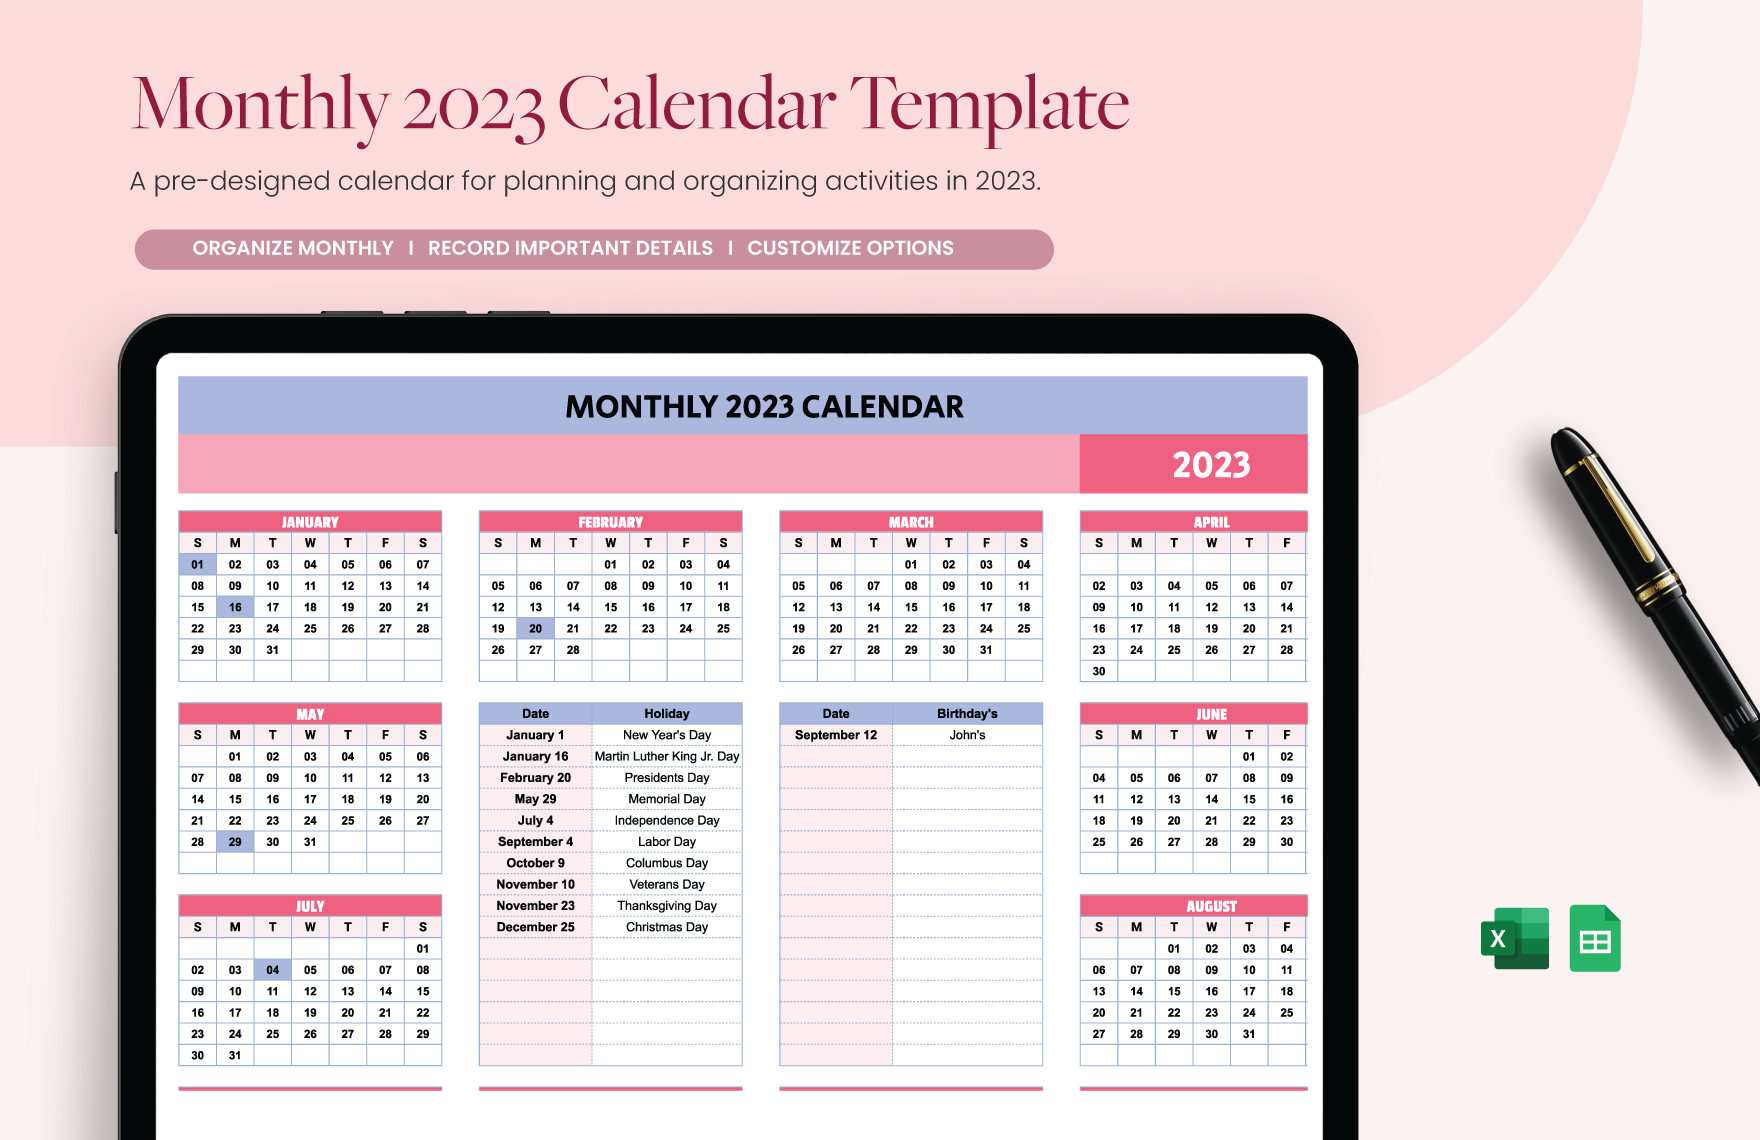 Monthly 2023 Calendar Template